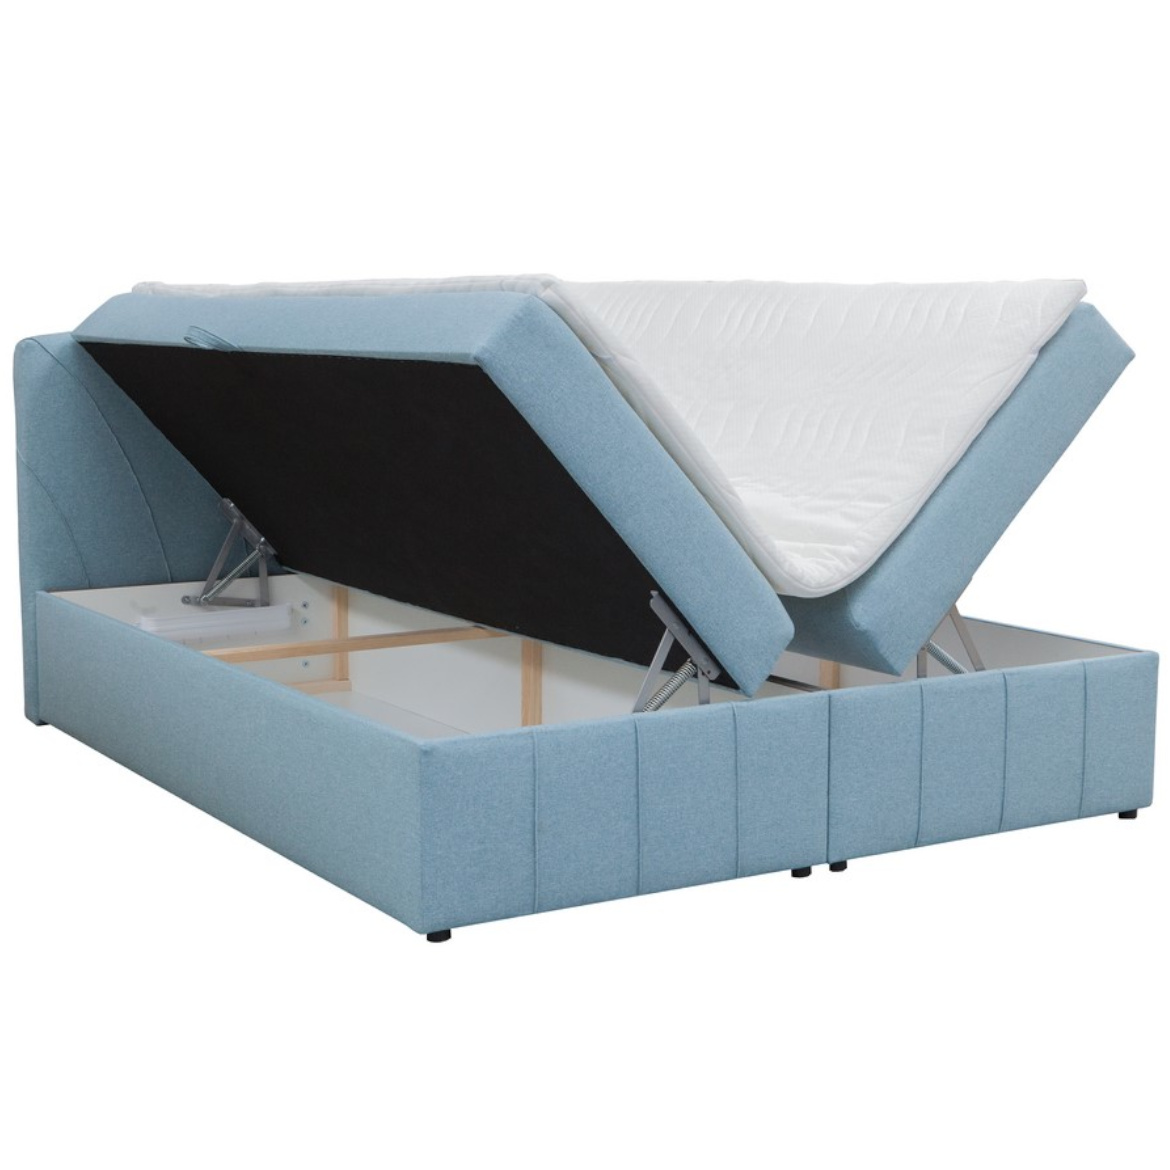 Krevet Cairo sa 2 prostora za odlaganje 185x211x92, plavi